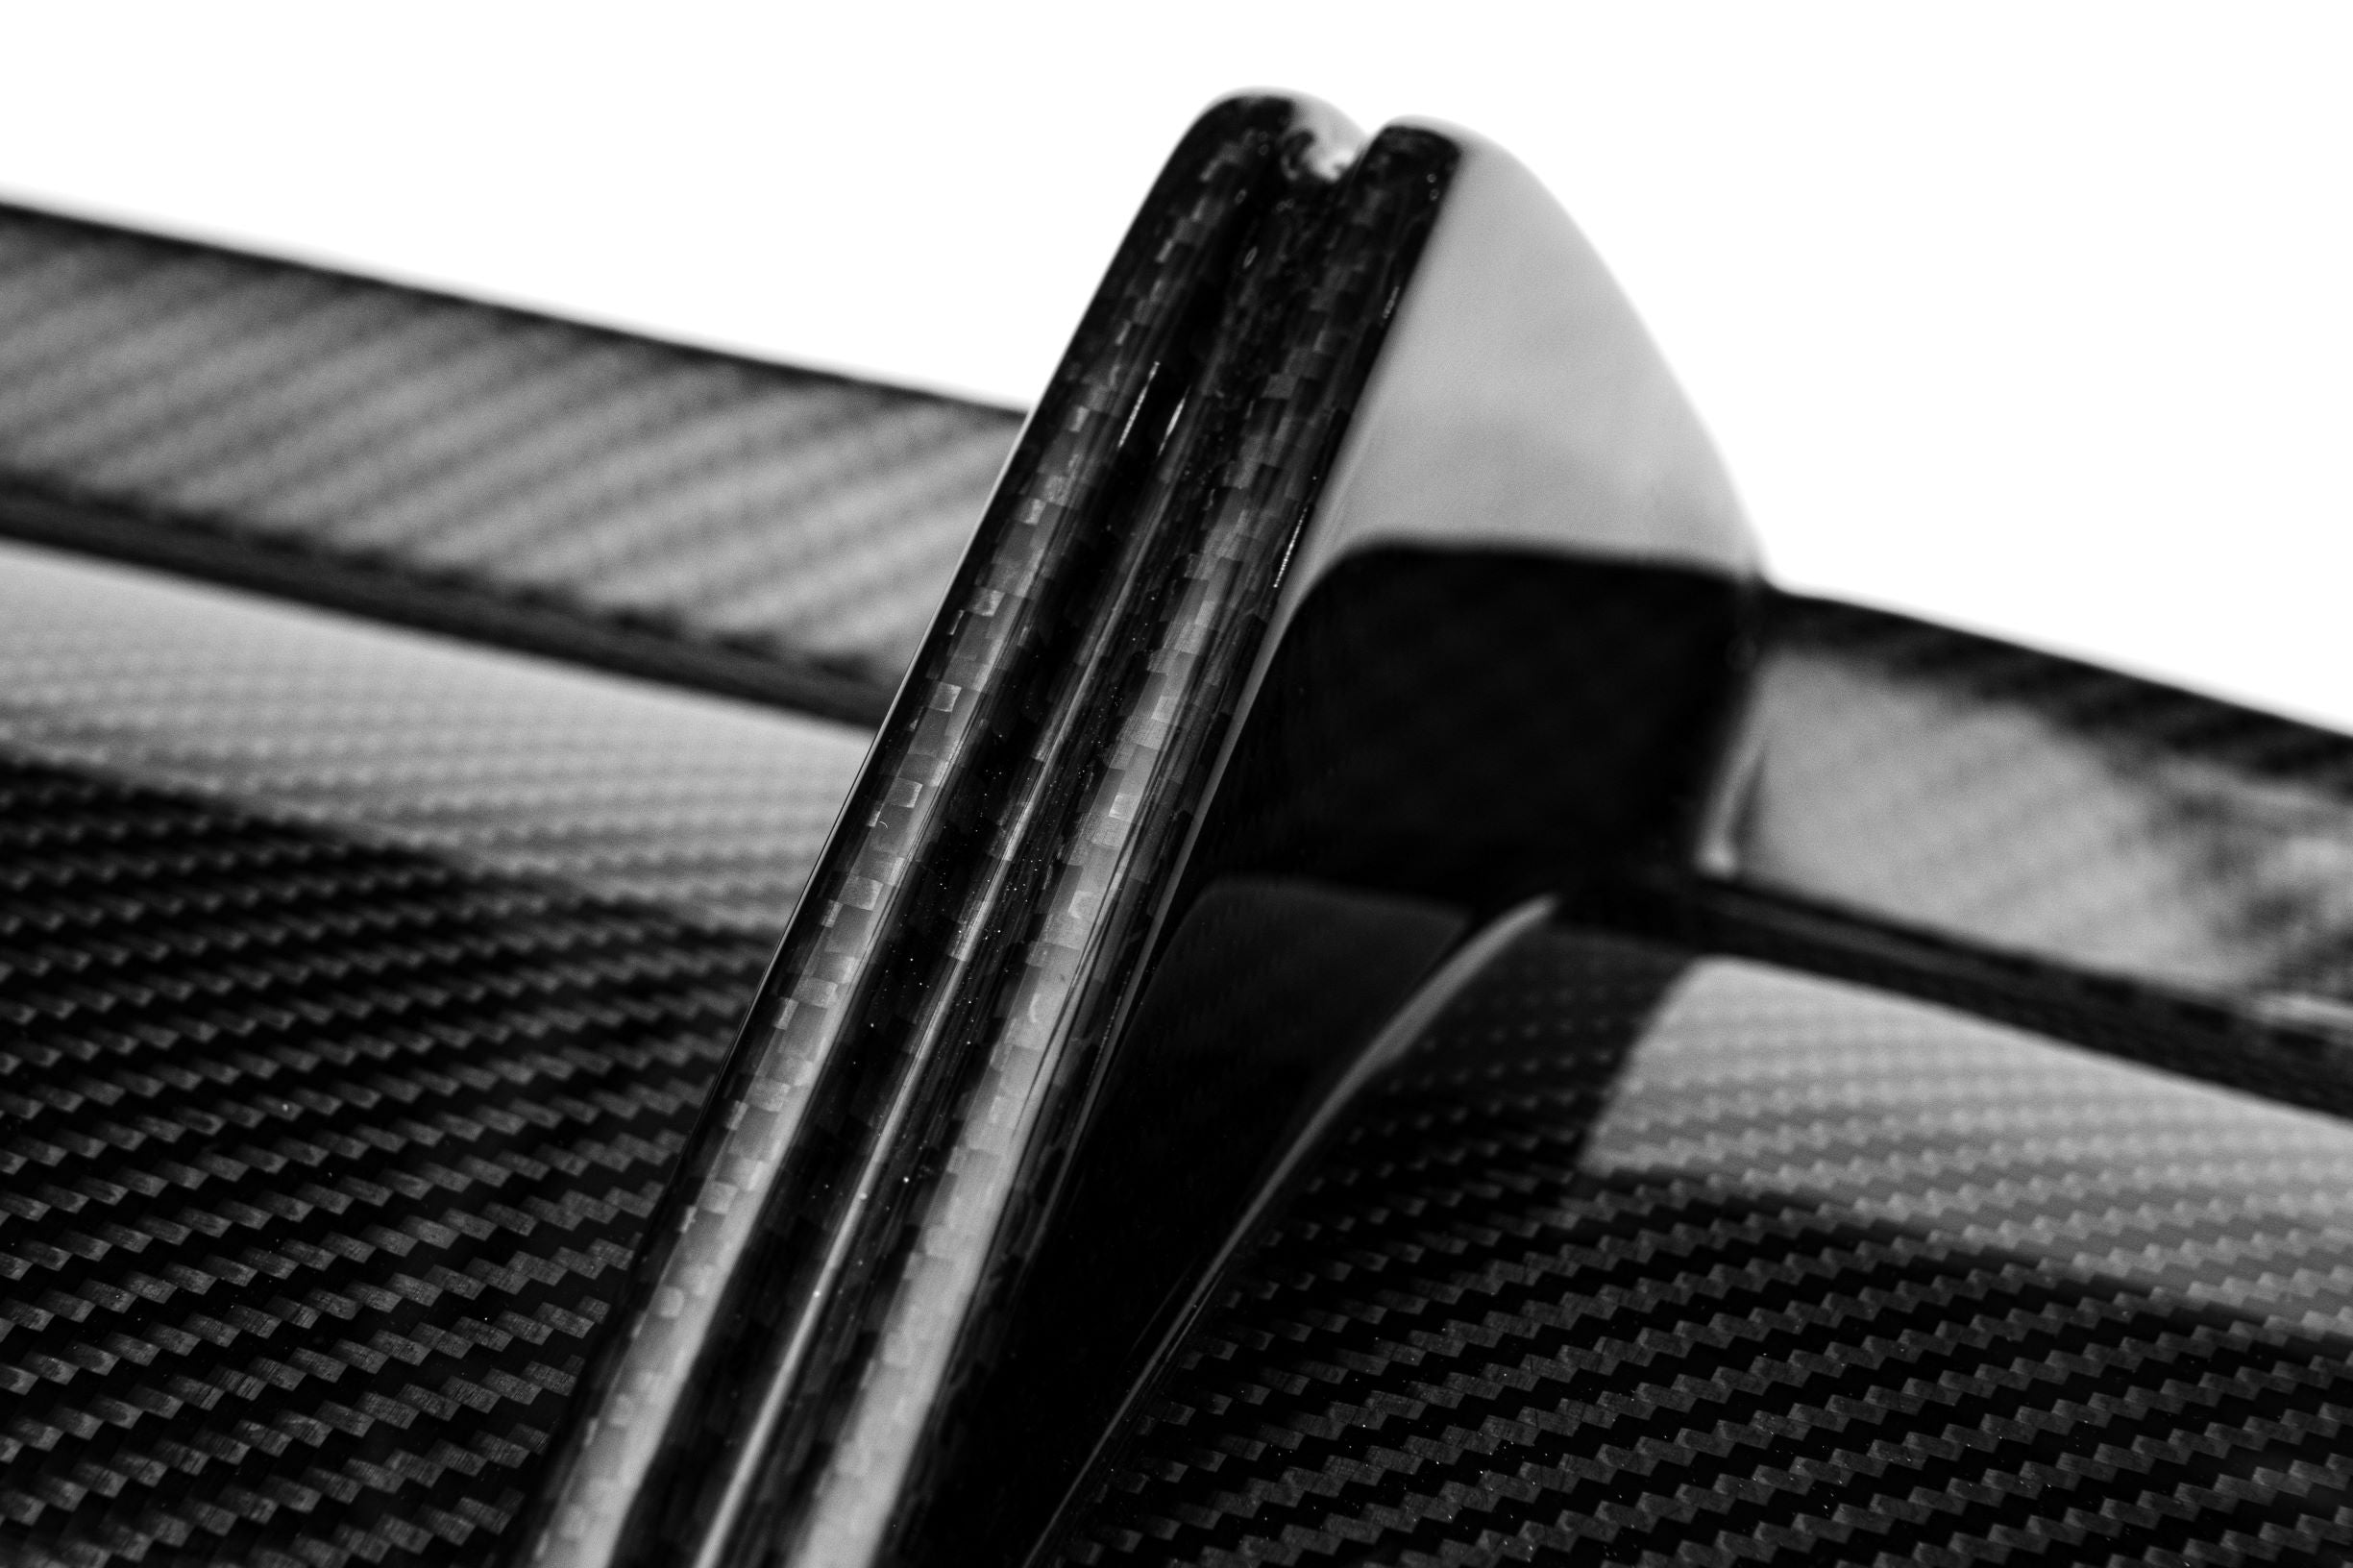 IPR Carbon Fiber Rear Diffuser & Rear Canards 3 Pcs for Audi TTRS 8S 2016-2019 Pre-facelift